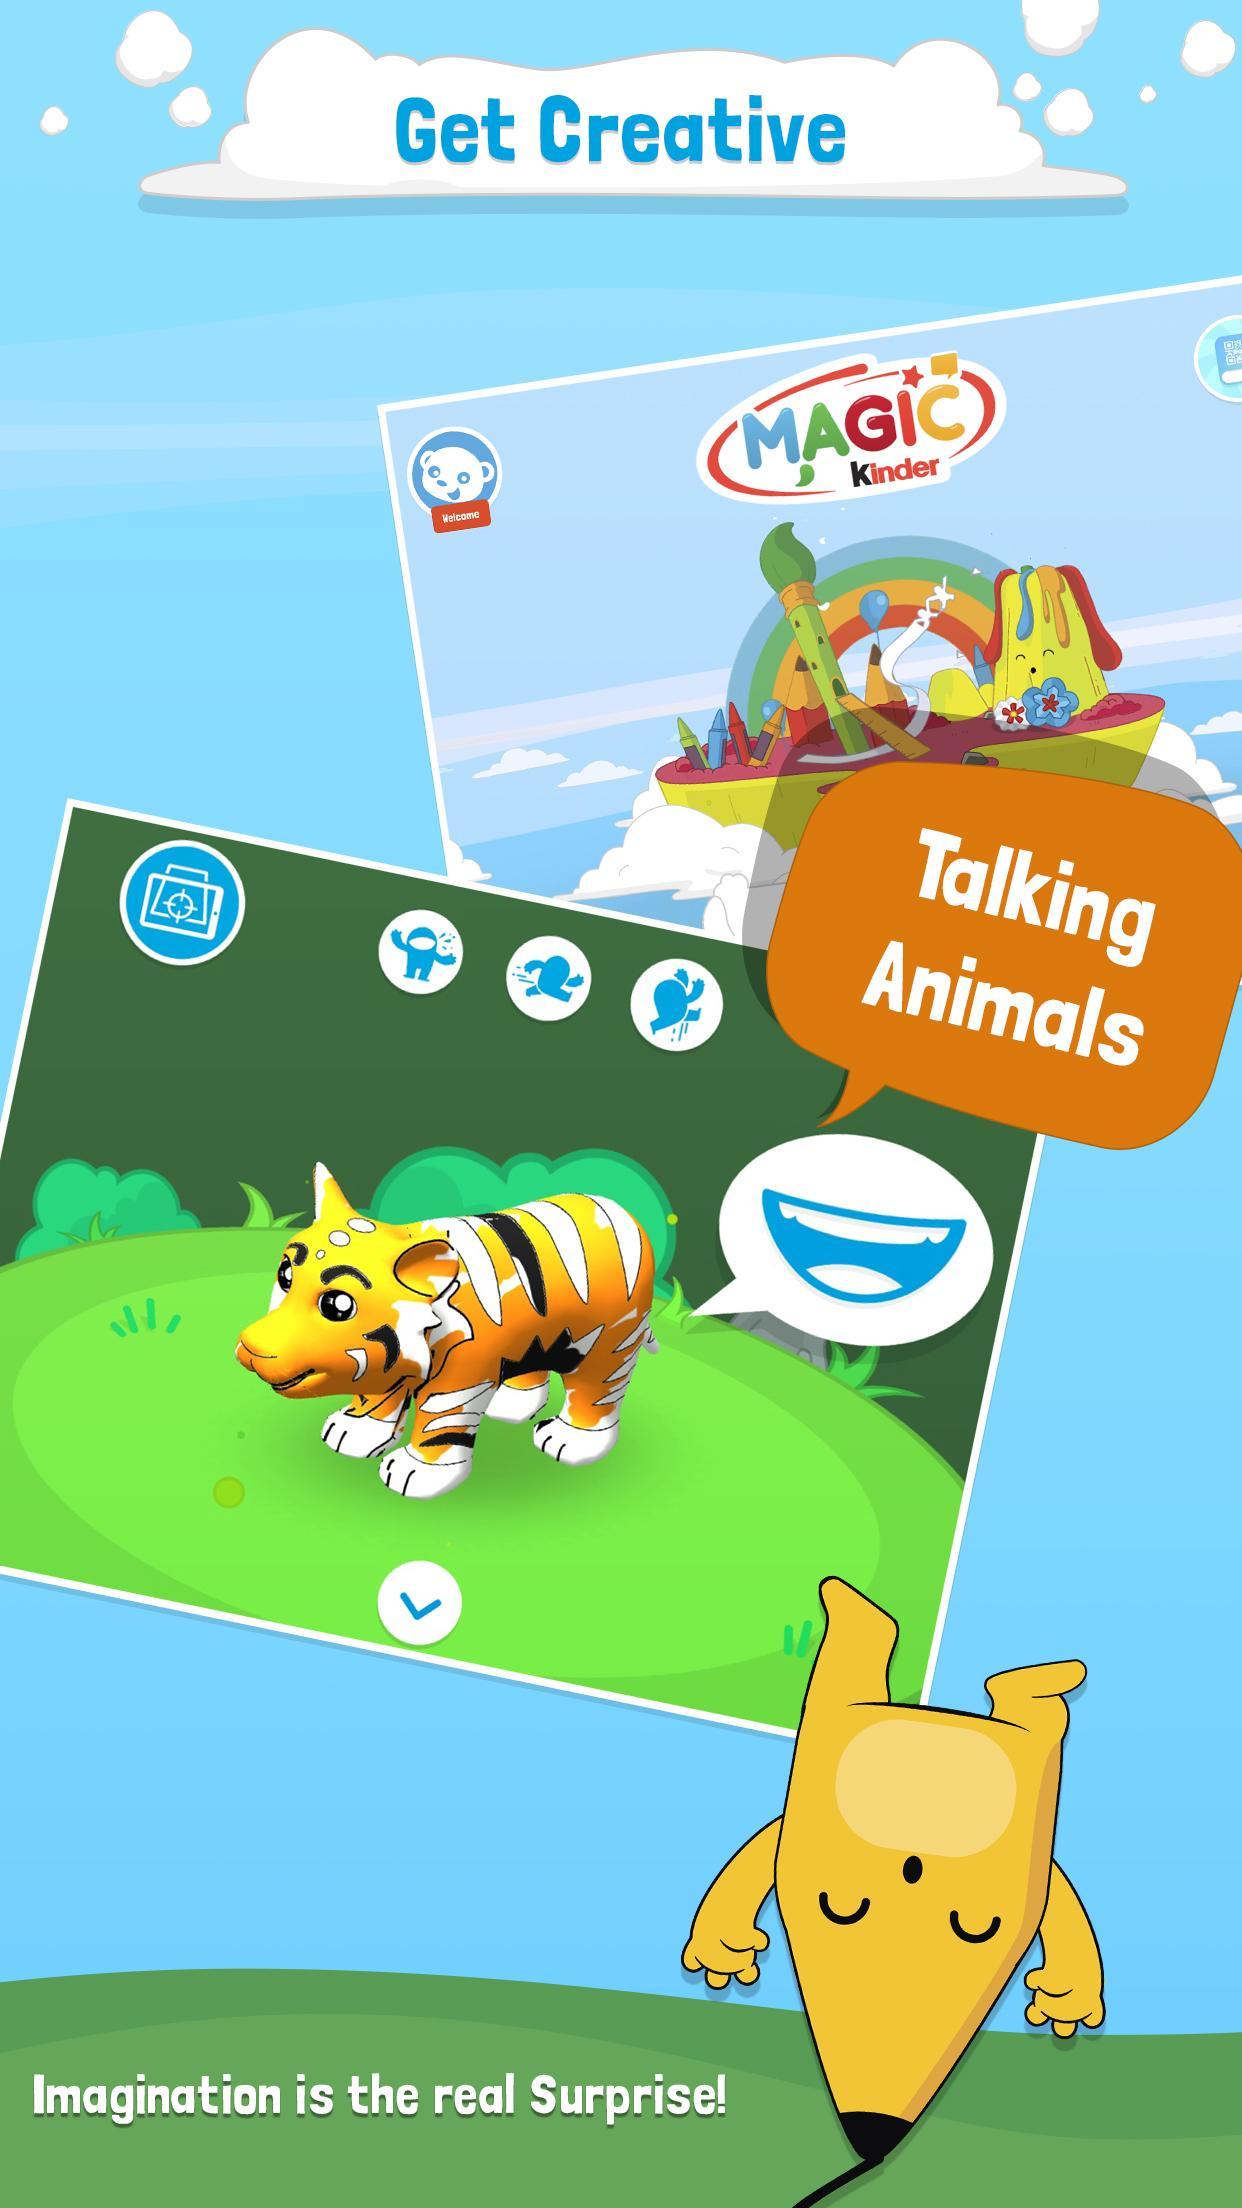 Magic Kinder Official App - Free Family Games 7.1.140 Screenshot 2